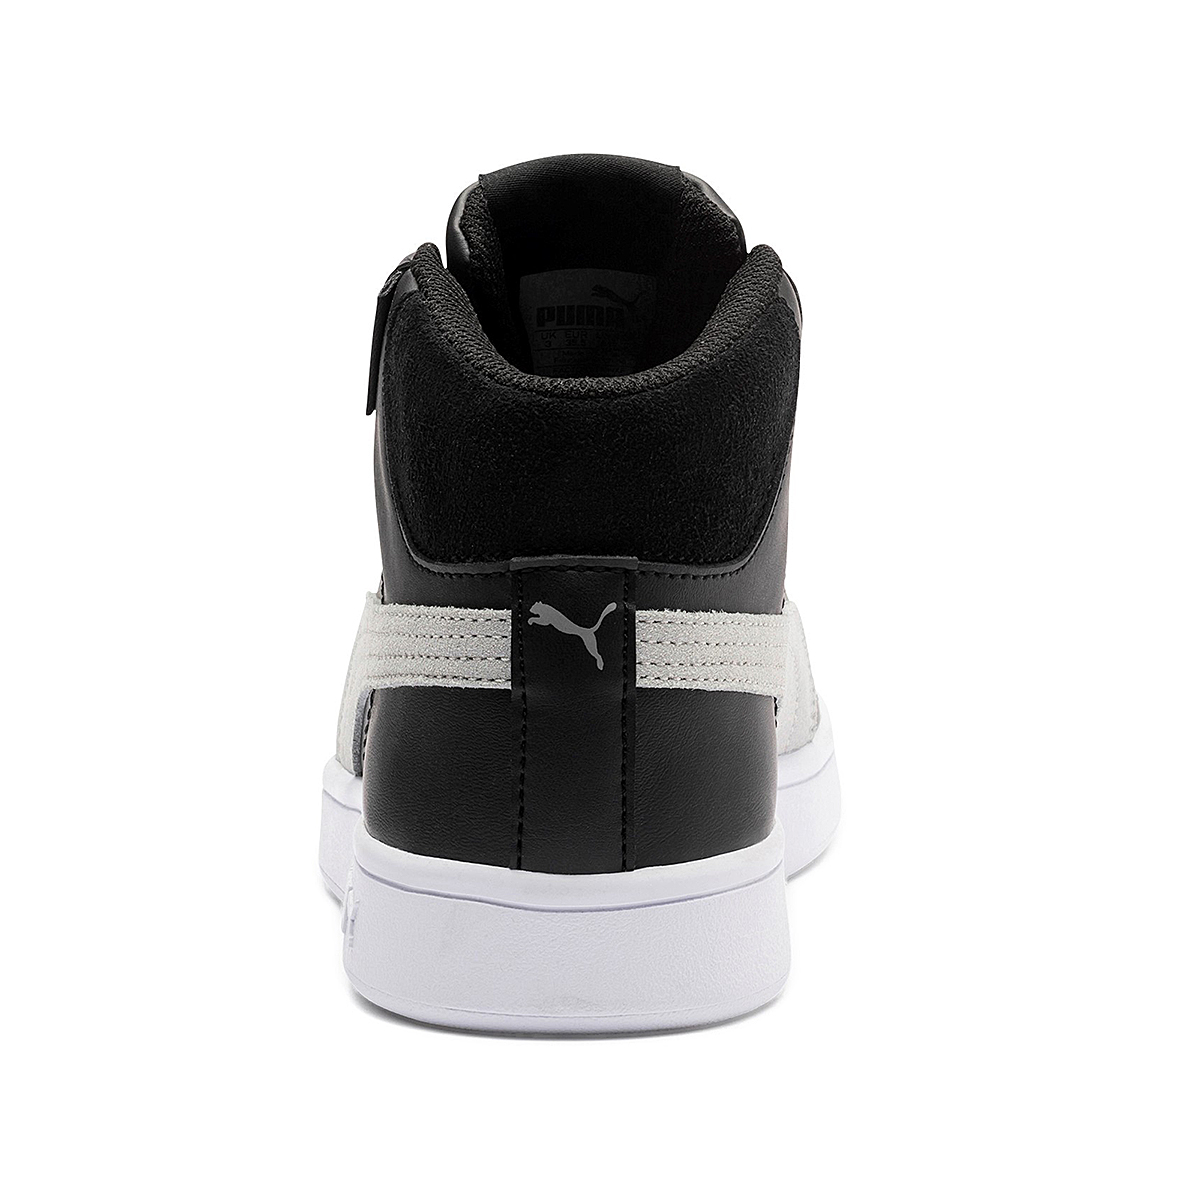 Puma Smash v2 Mid PureTEX JR Kinder Unisex Sneaker Schuh schwarz 367854 01